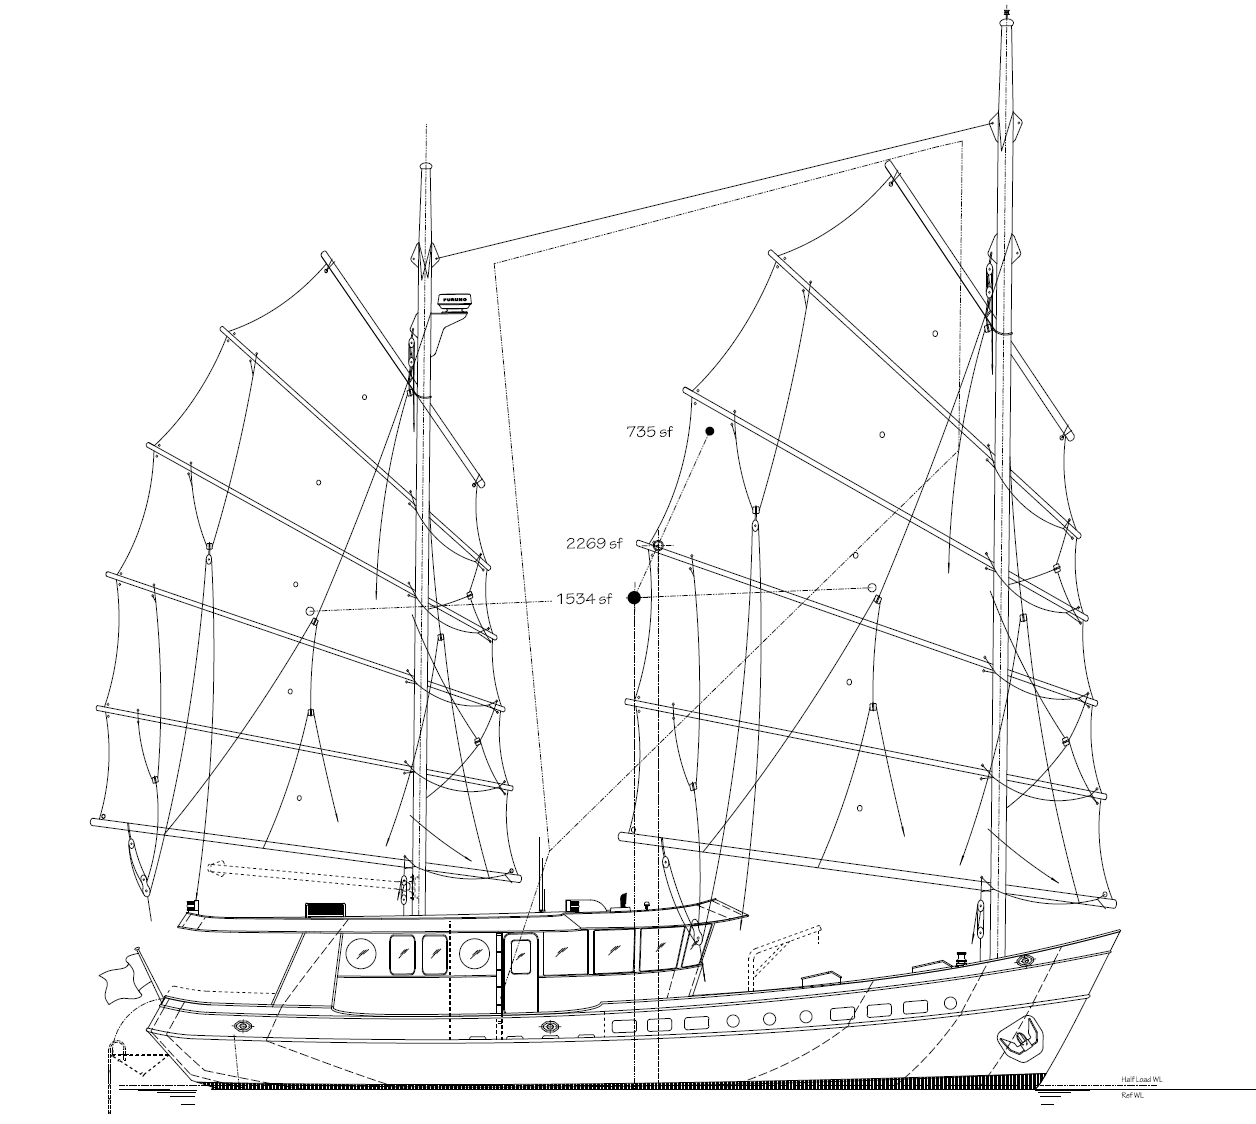 60' Swallow's Nest - Motor Sailing Yacht